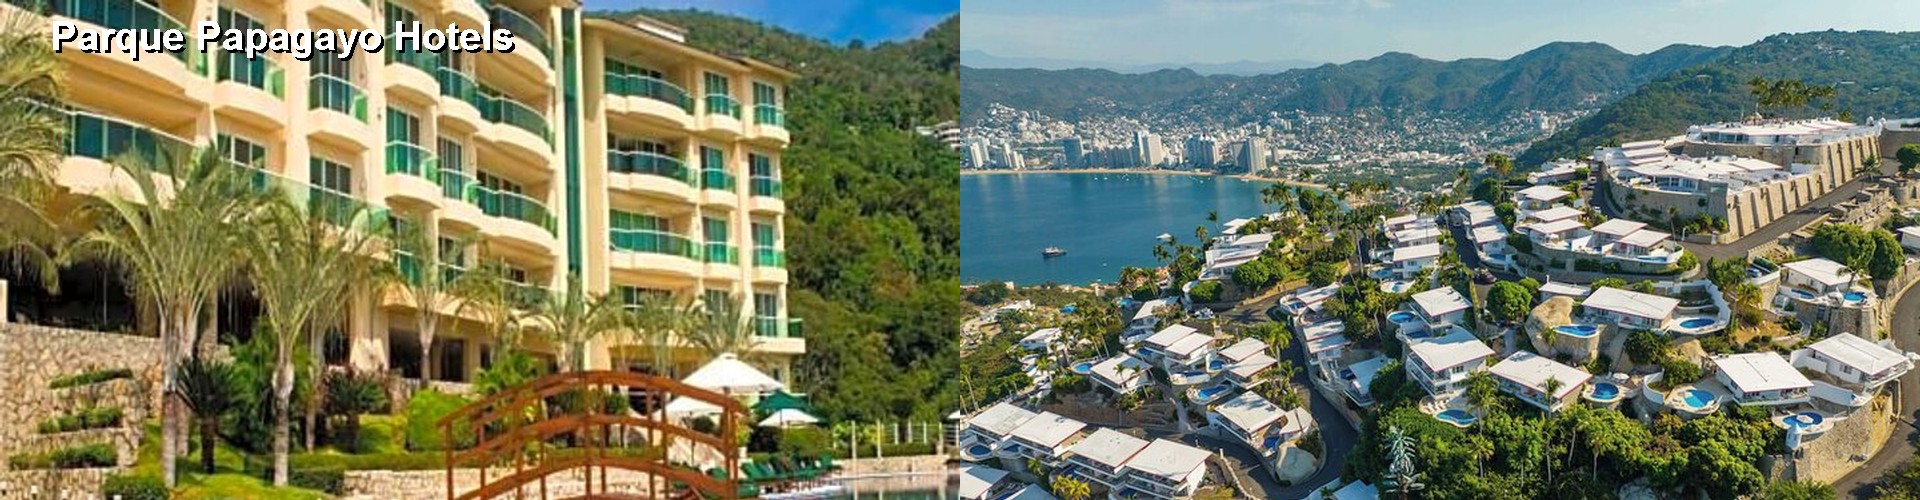 5 Best Hotels near Parque Papagayo